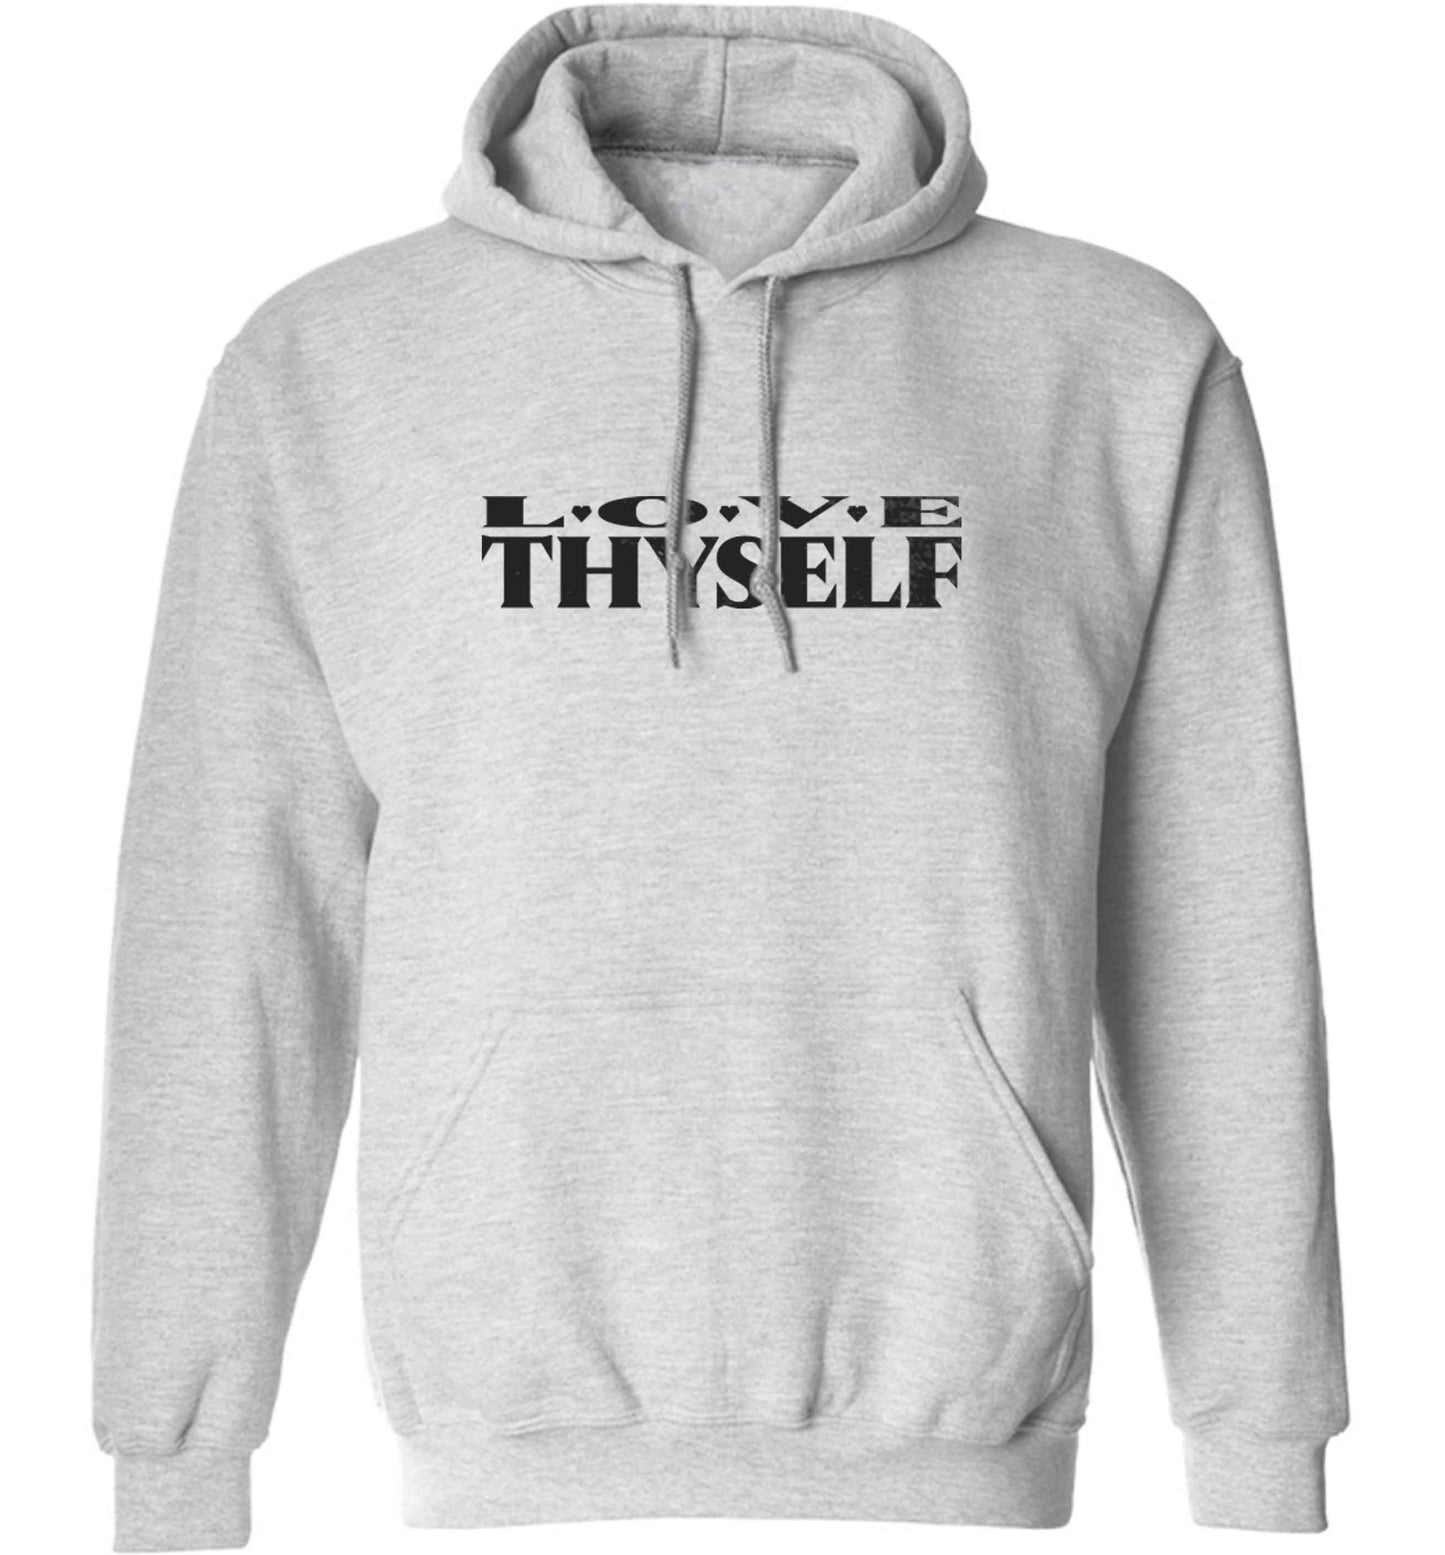 Love thyself adults unisex grey hoodie 2XL